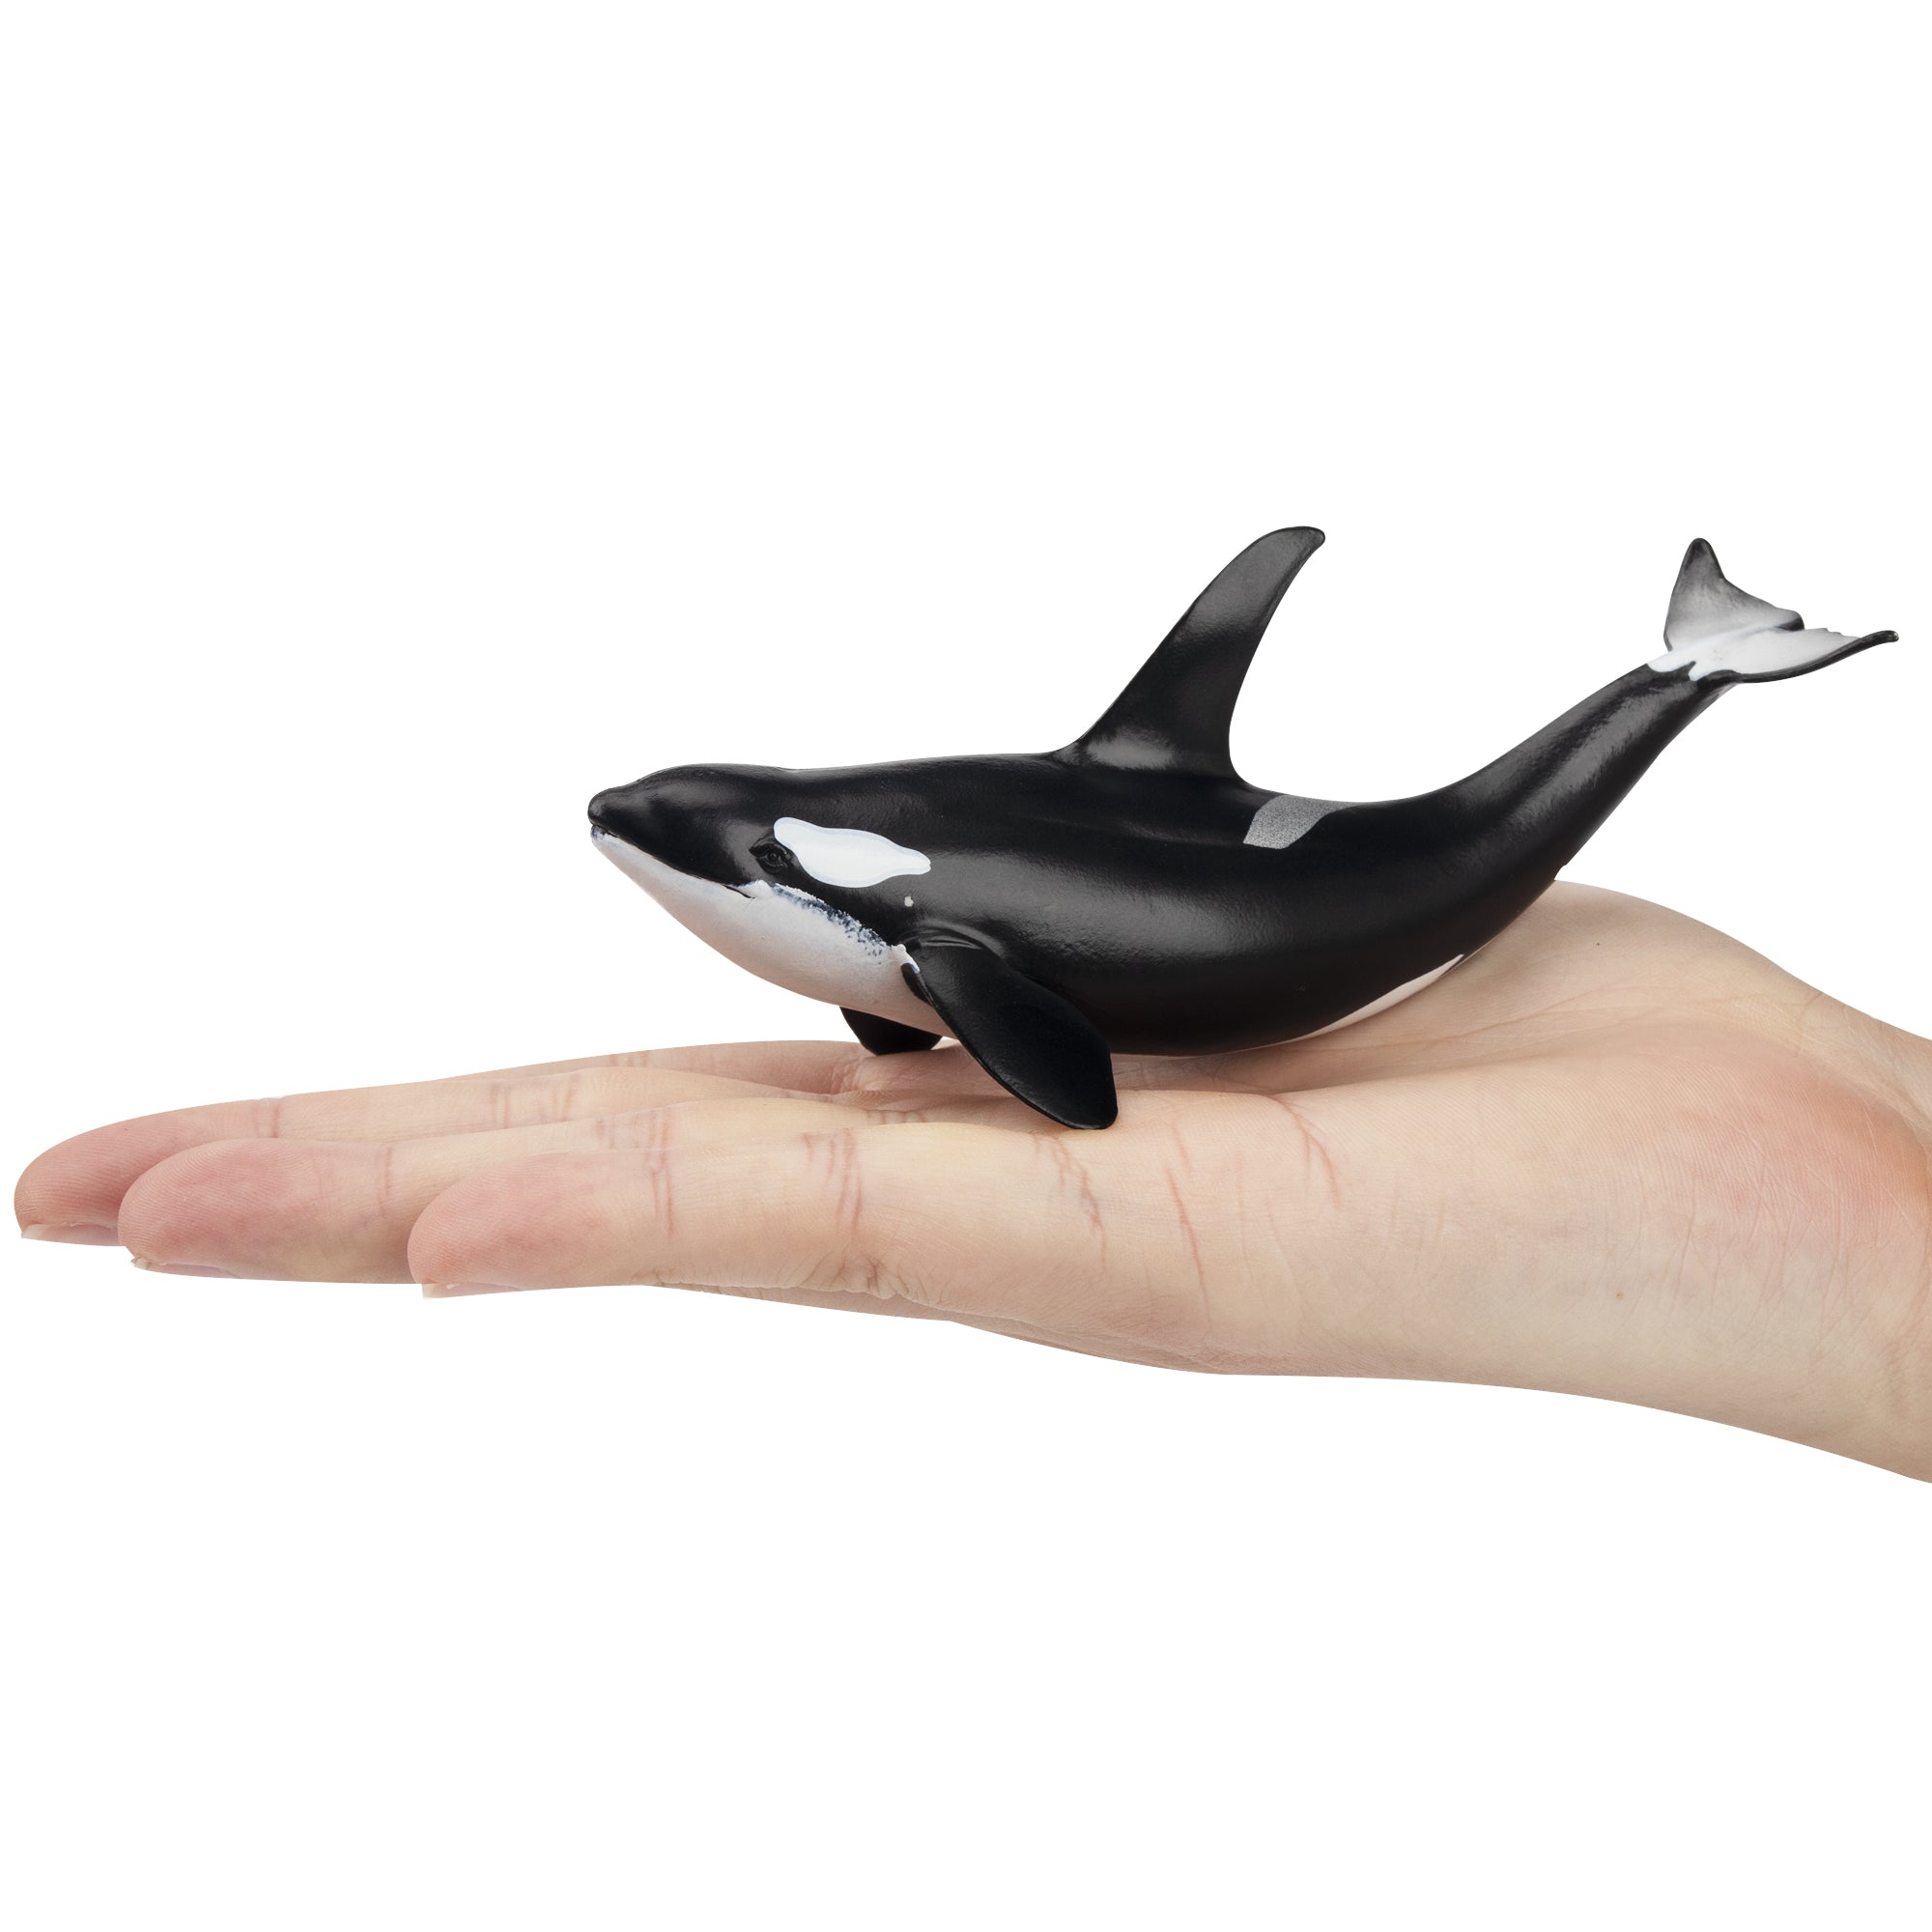 Toymany Orca Figurine Toy-on hand